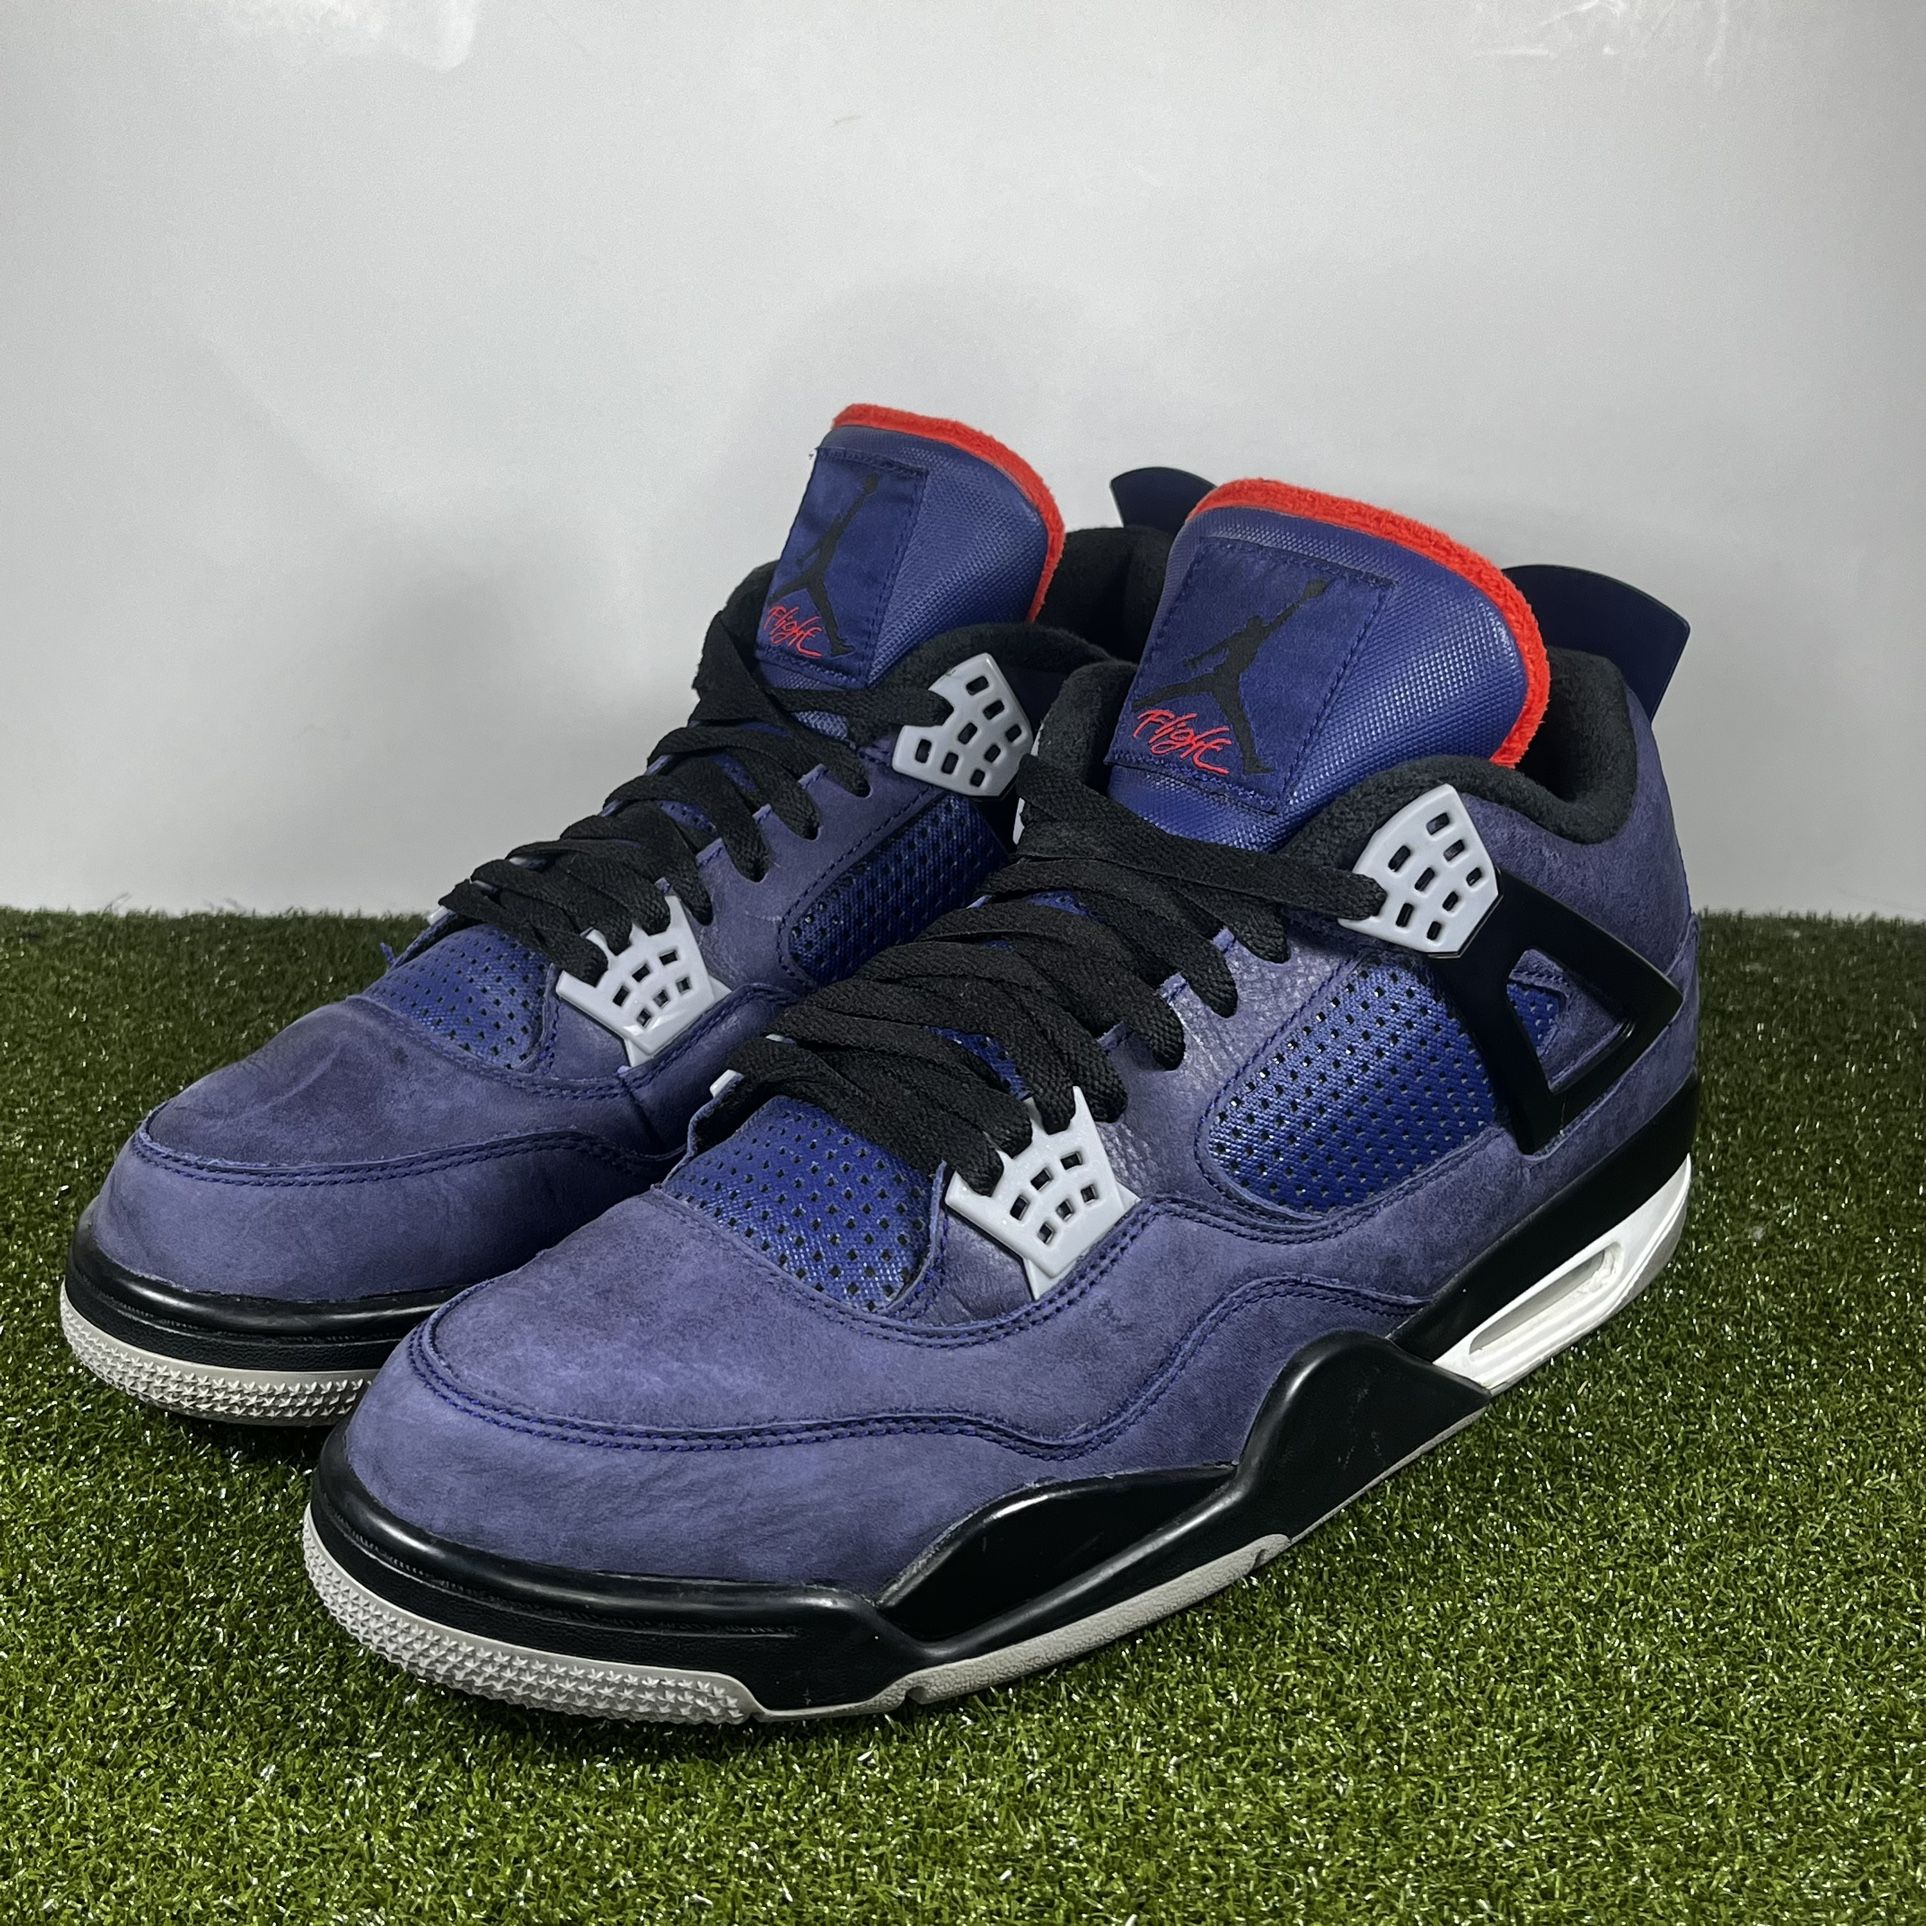 Nike Air Jordan 4 IV Retro Winter Blue CQ9597-401 Men's Sneakers Size 13